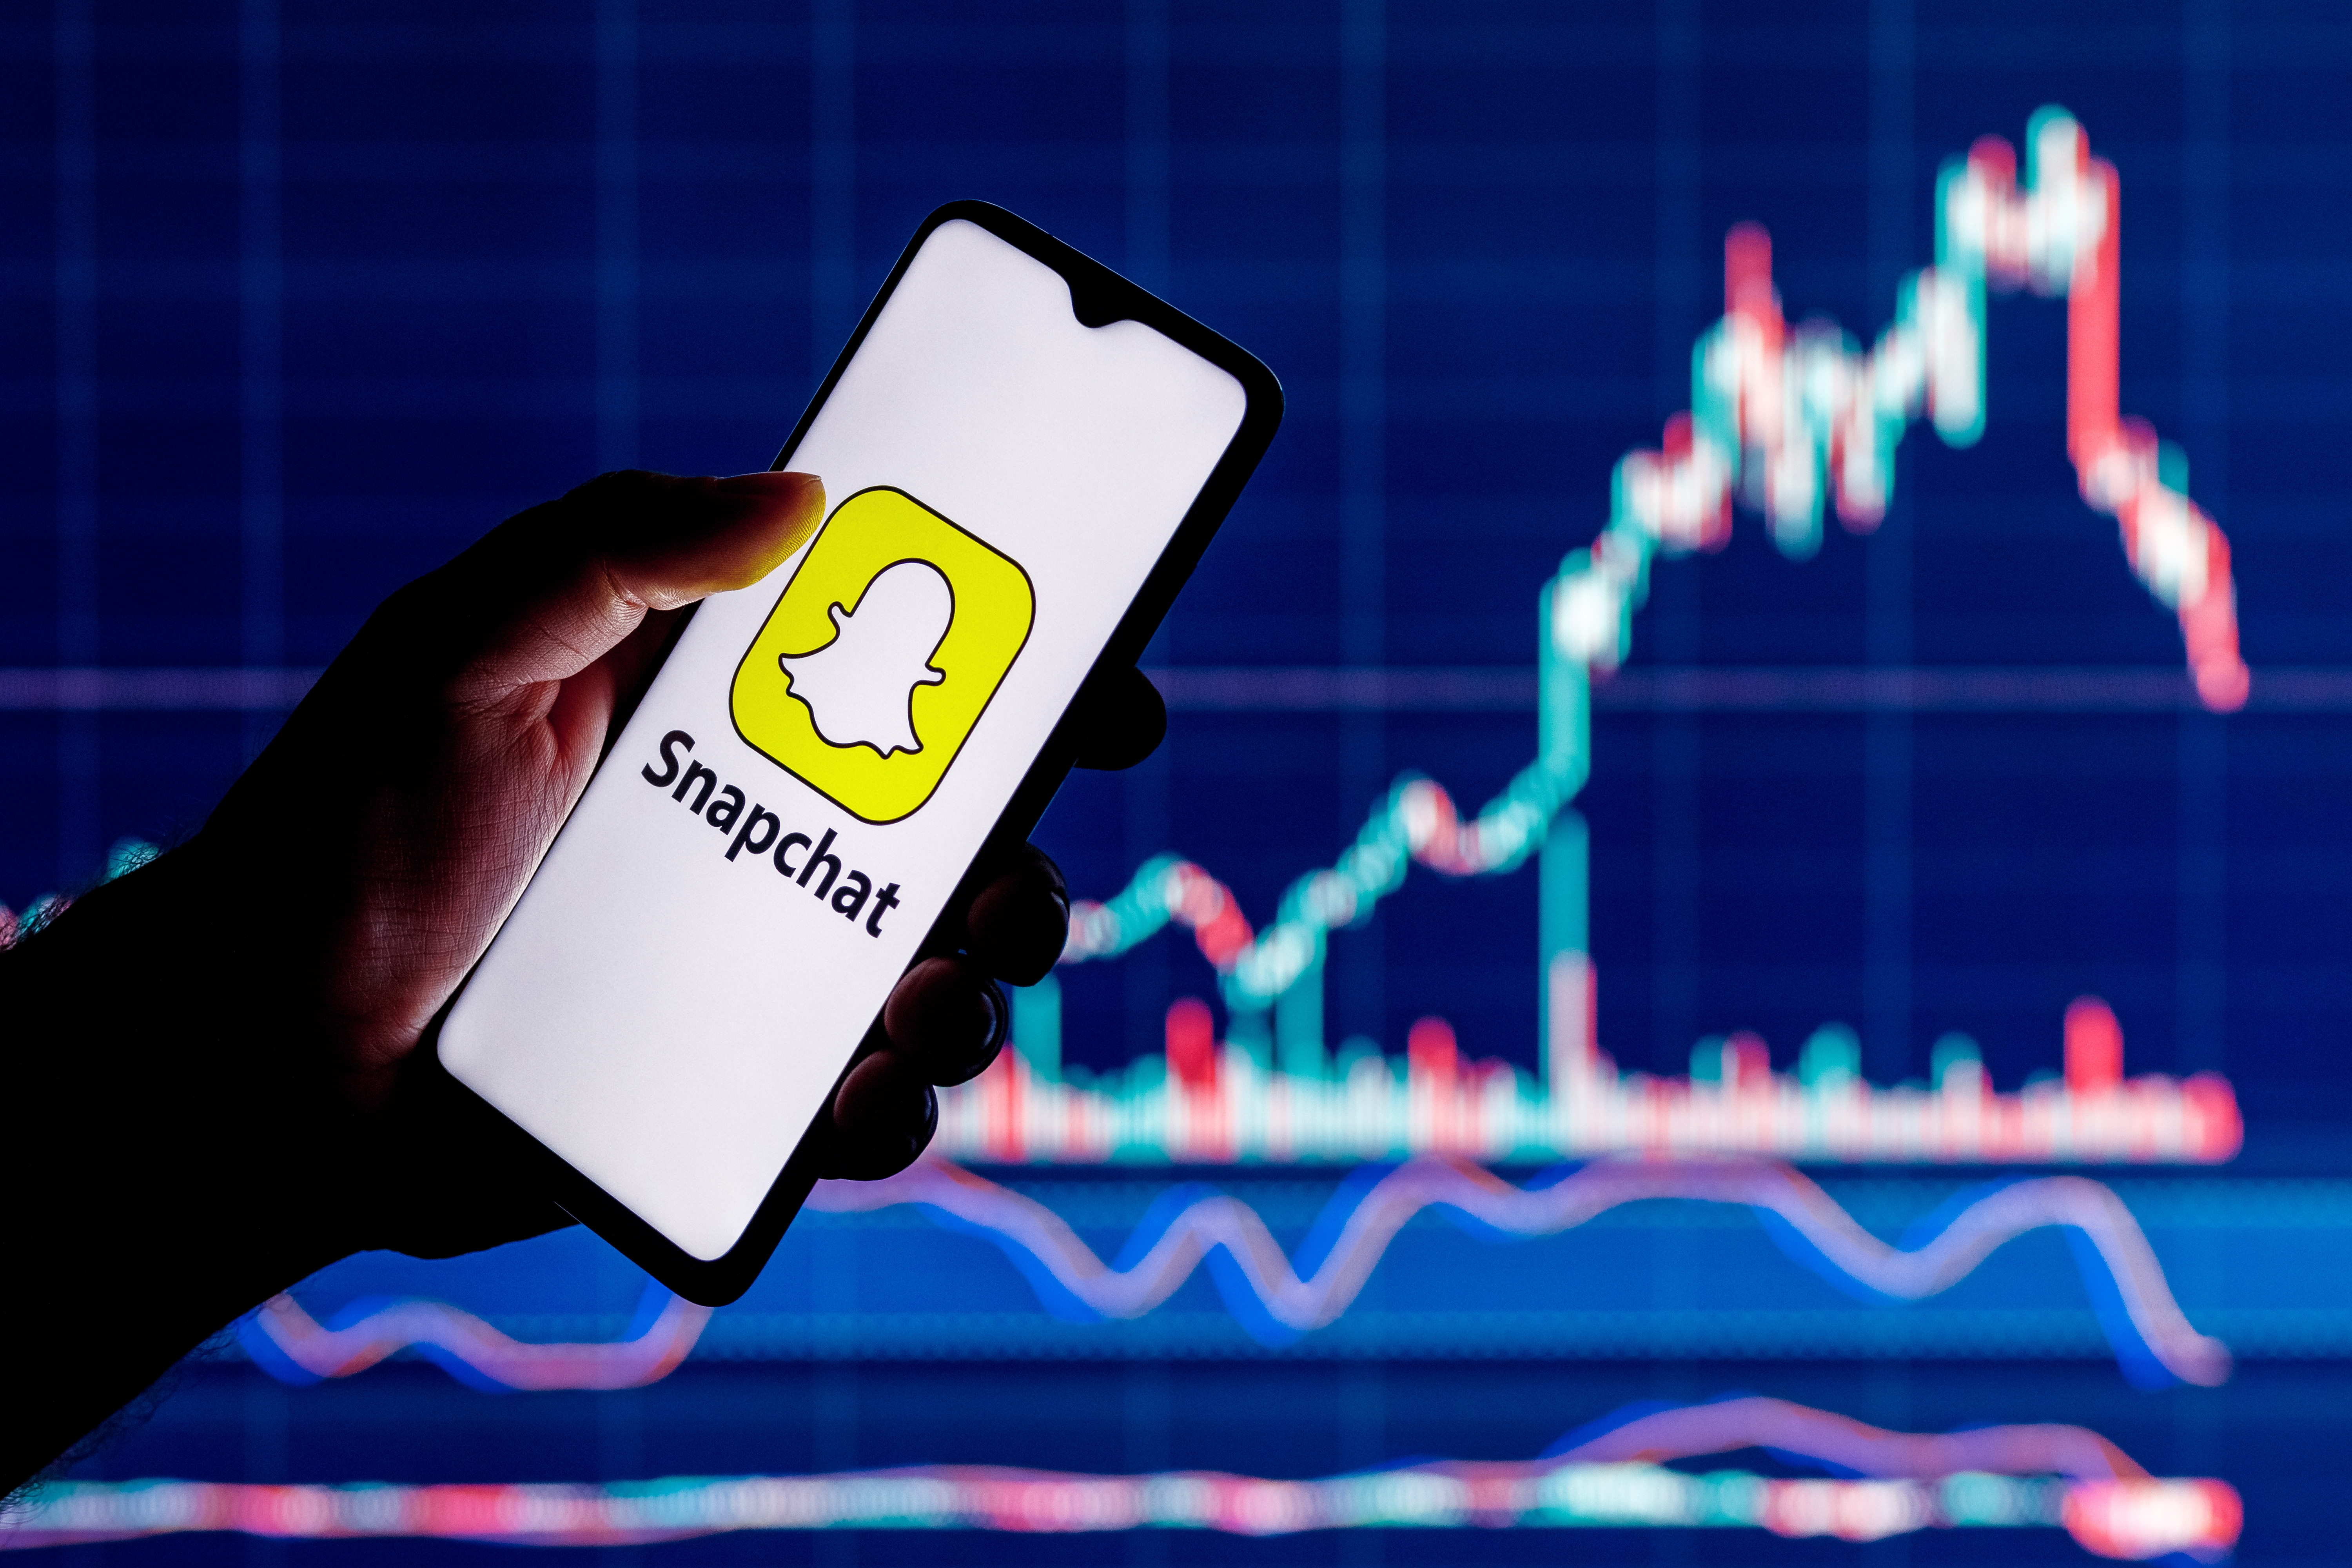 Snapchat: The Rise & Fall of the Social Media Phenomenon